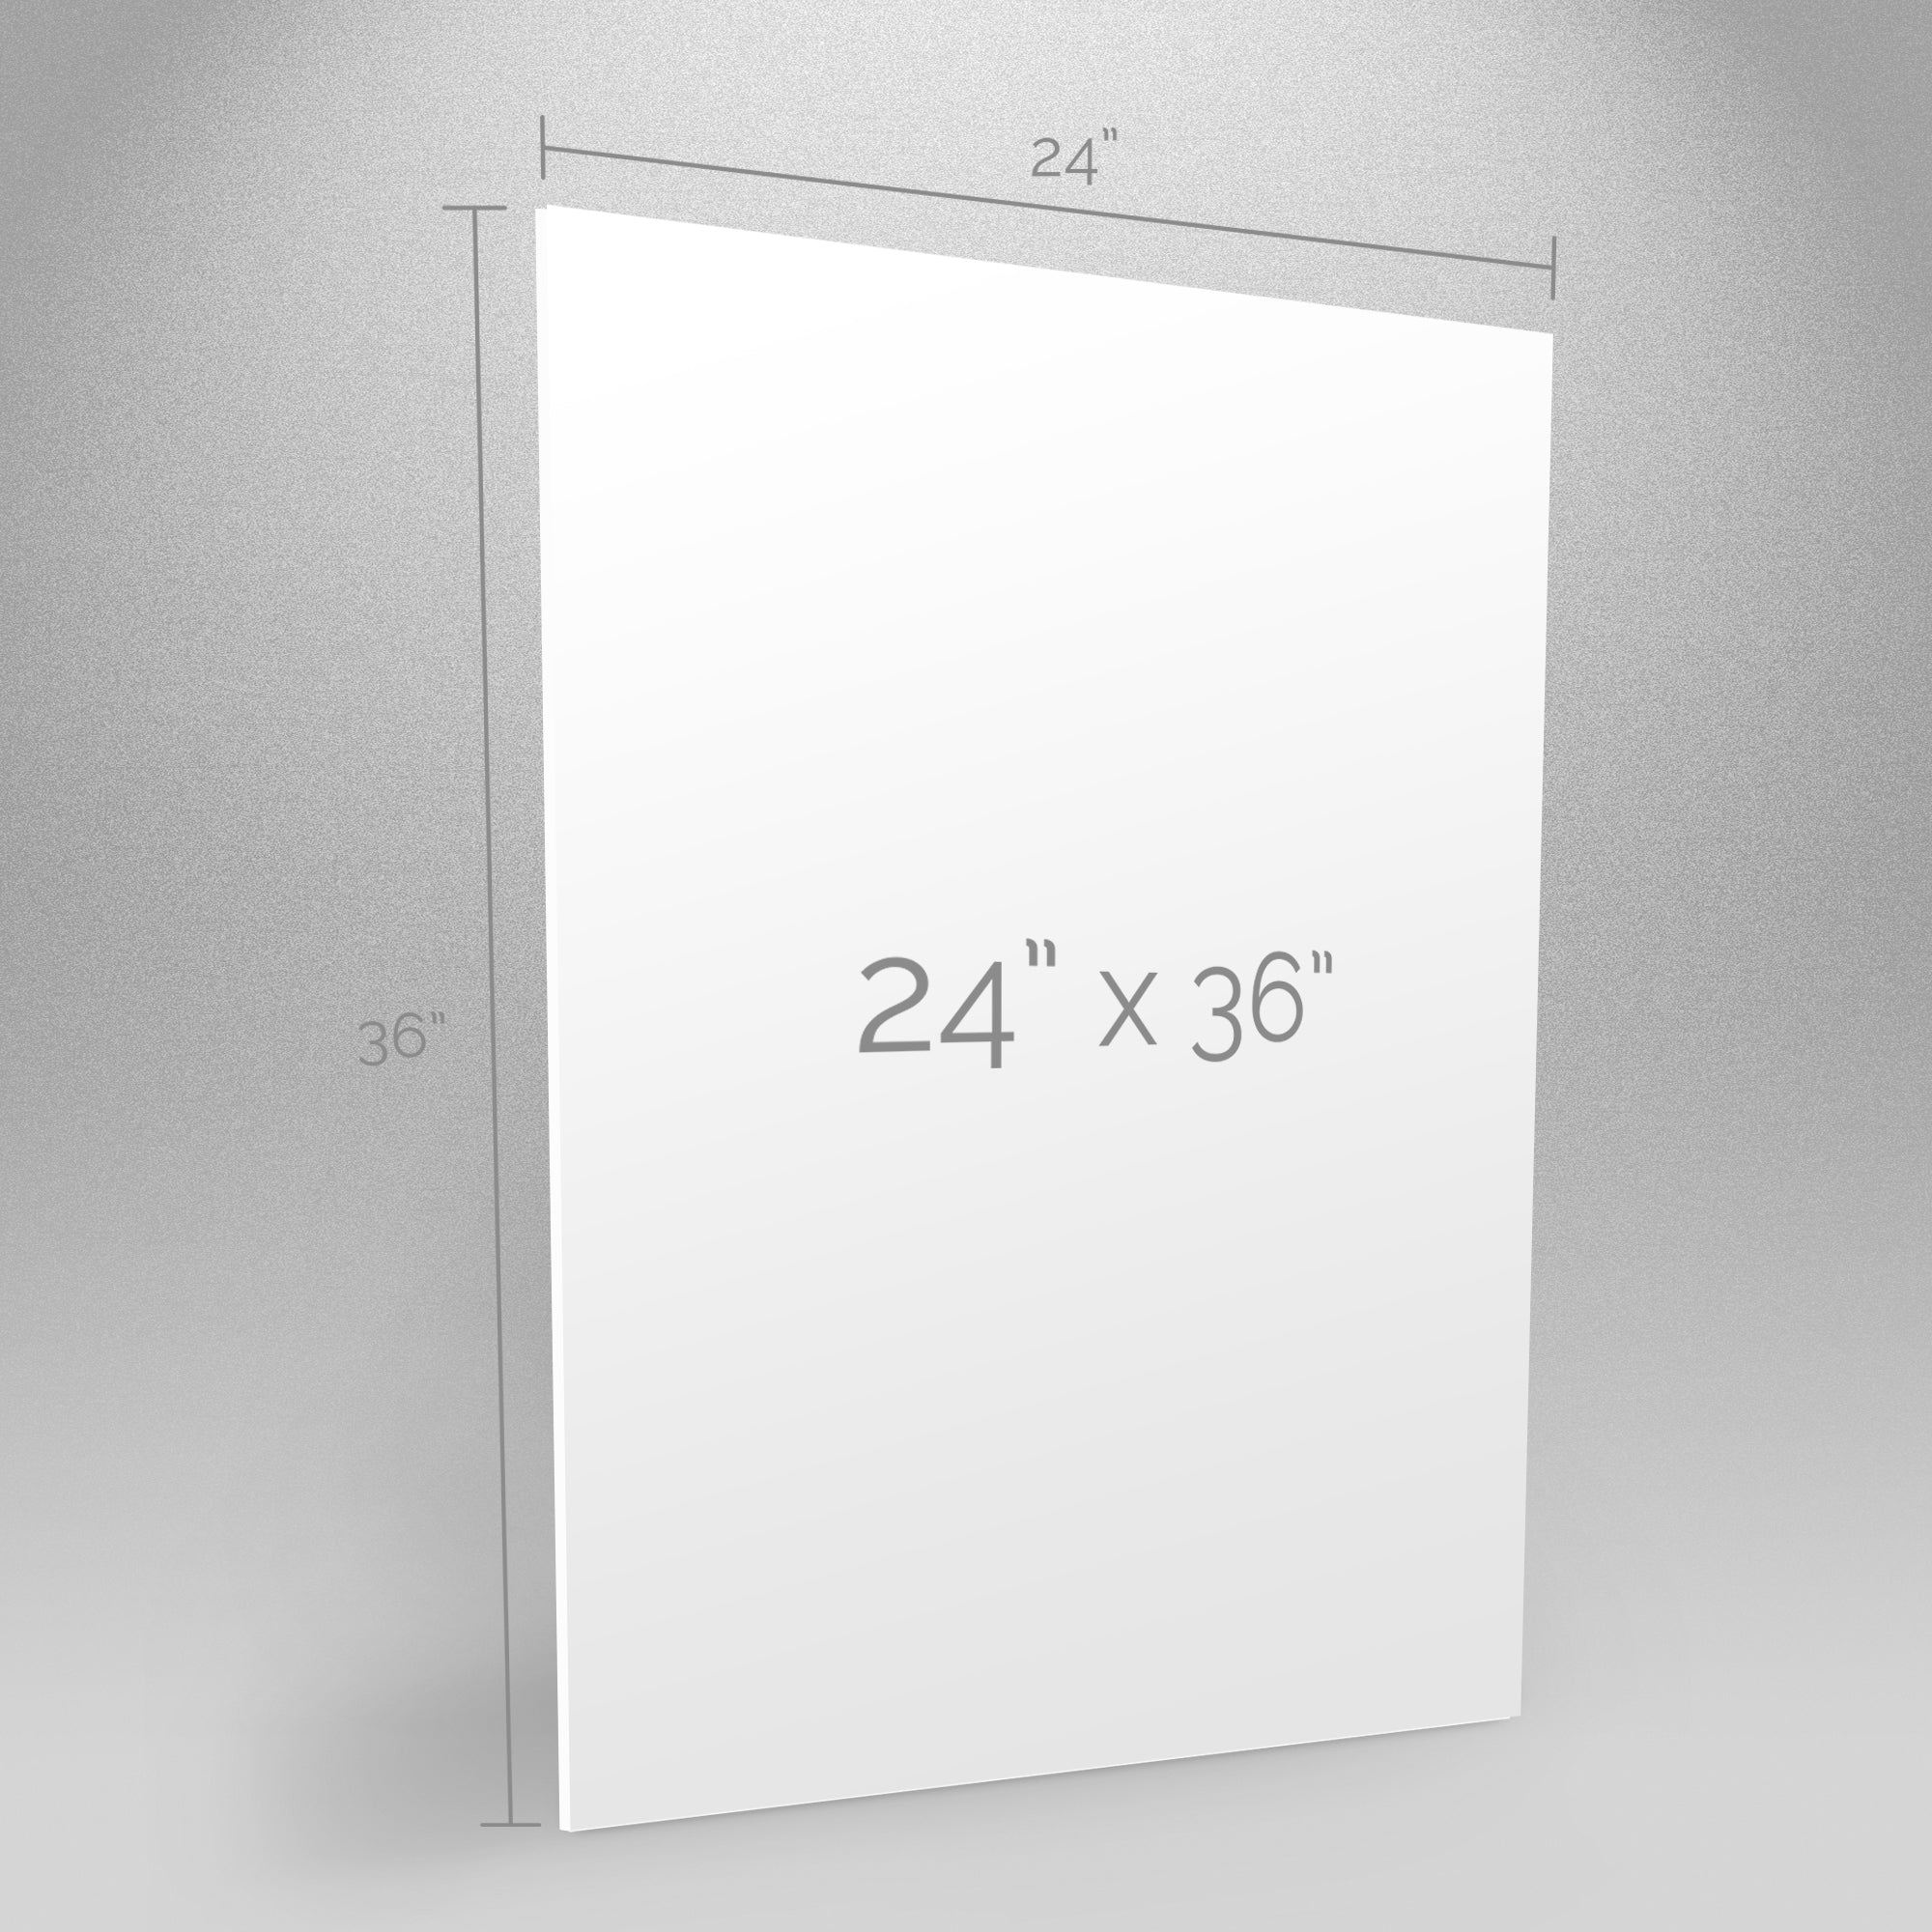 24x36 Foam Core Board Printing | Zazzle